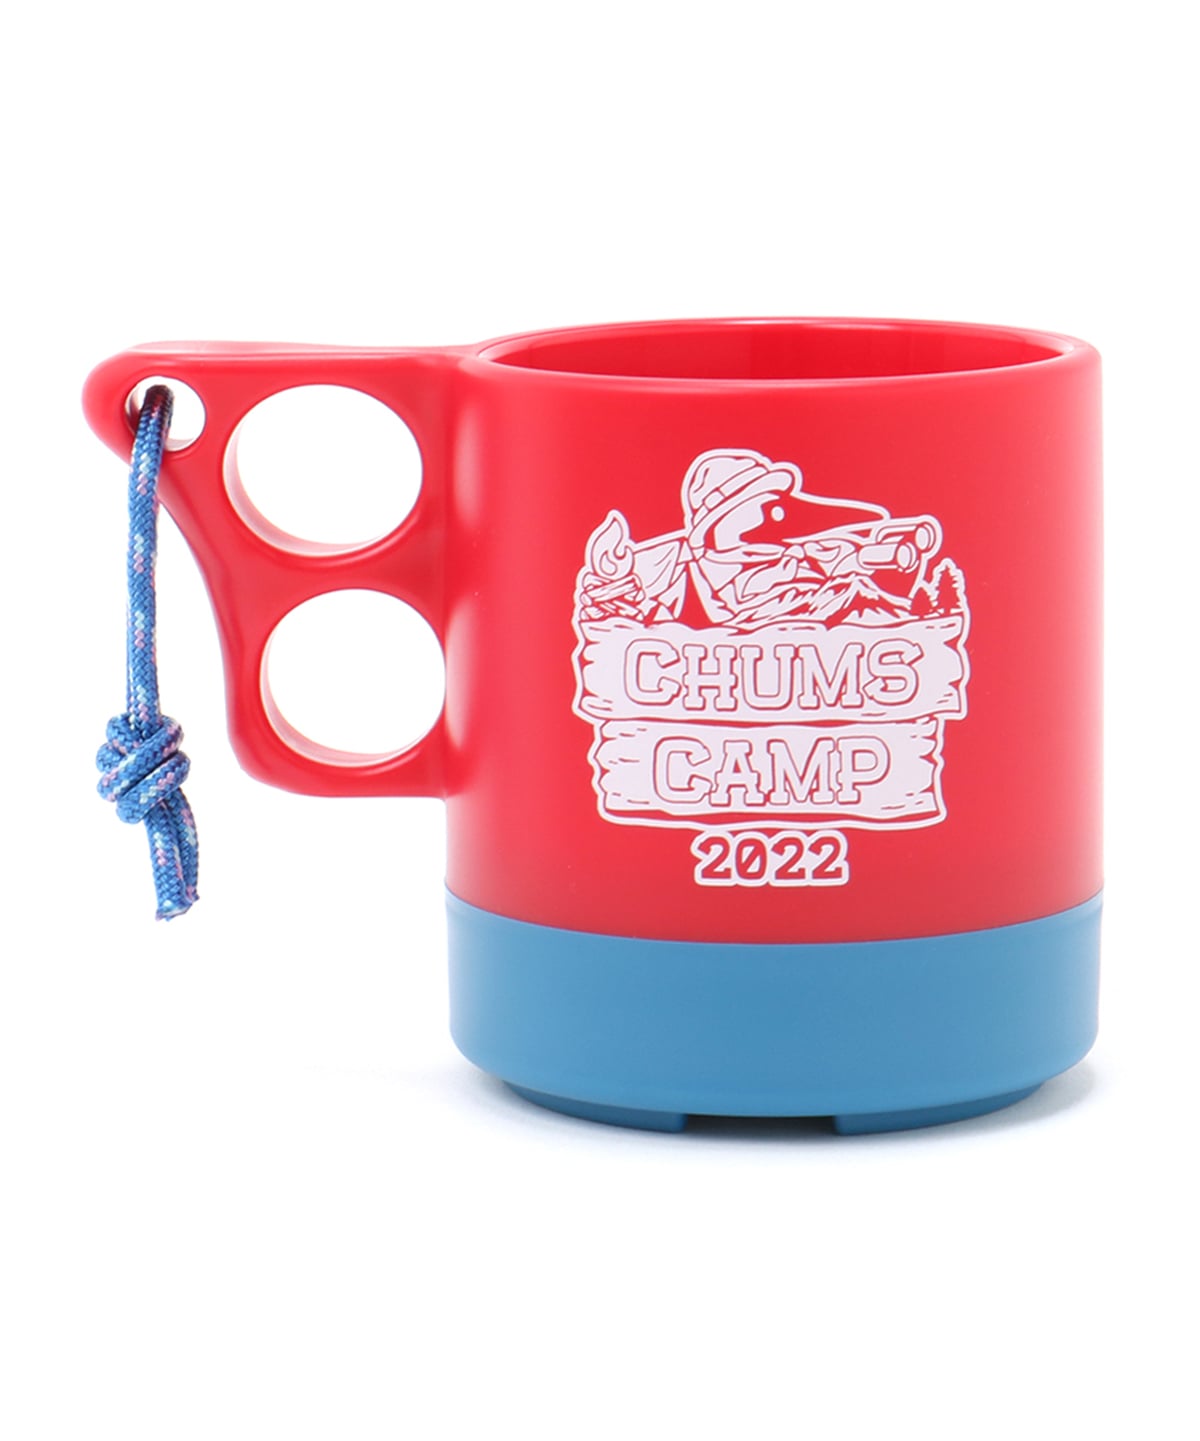 CHUMS CAMP 2022 Camper Mug Cup/【限定】チャムスキャンプ2022キャンパーマグカップ(食器/カップ)